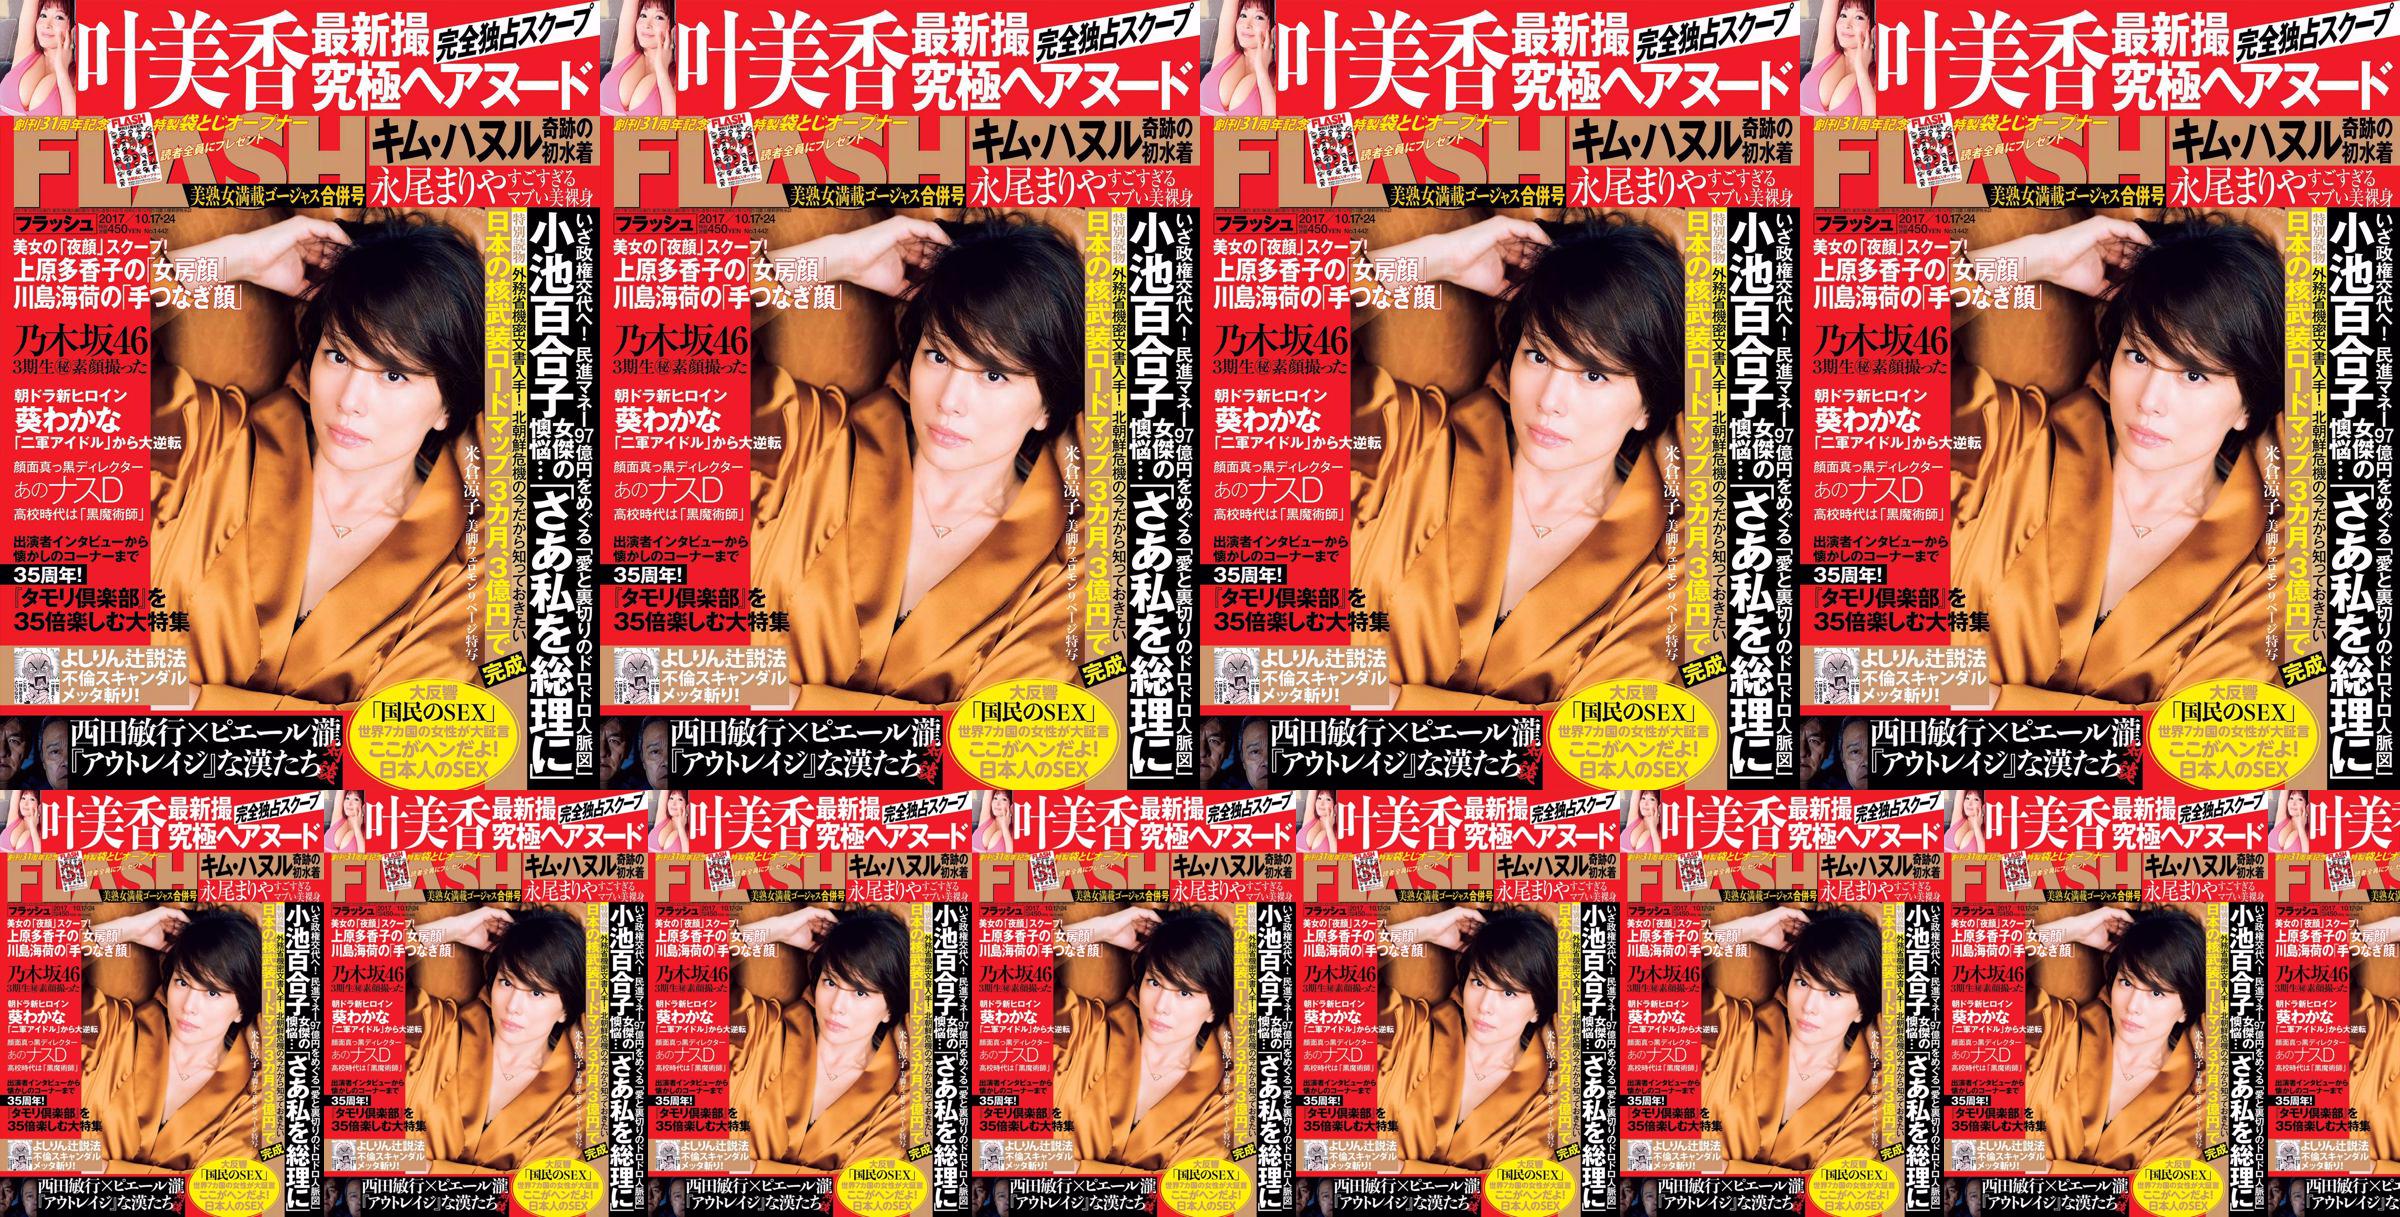 [FLASH] Yonekura Ryoko Ye Meixiang Tachibana Flower Rin Nagao ま り や 2017.10.17-24 Photo Magazine No.079b01 페이지 4